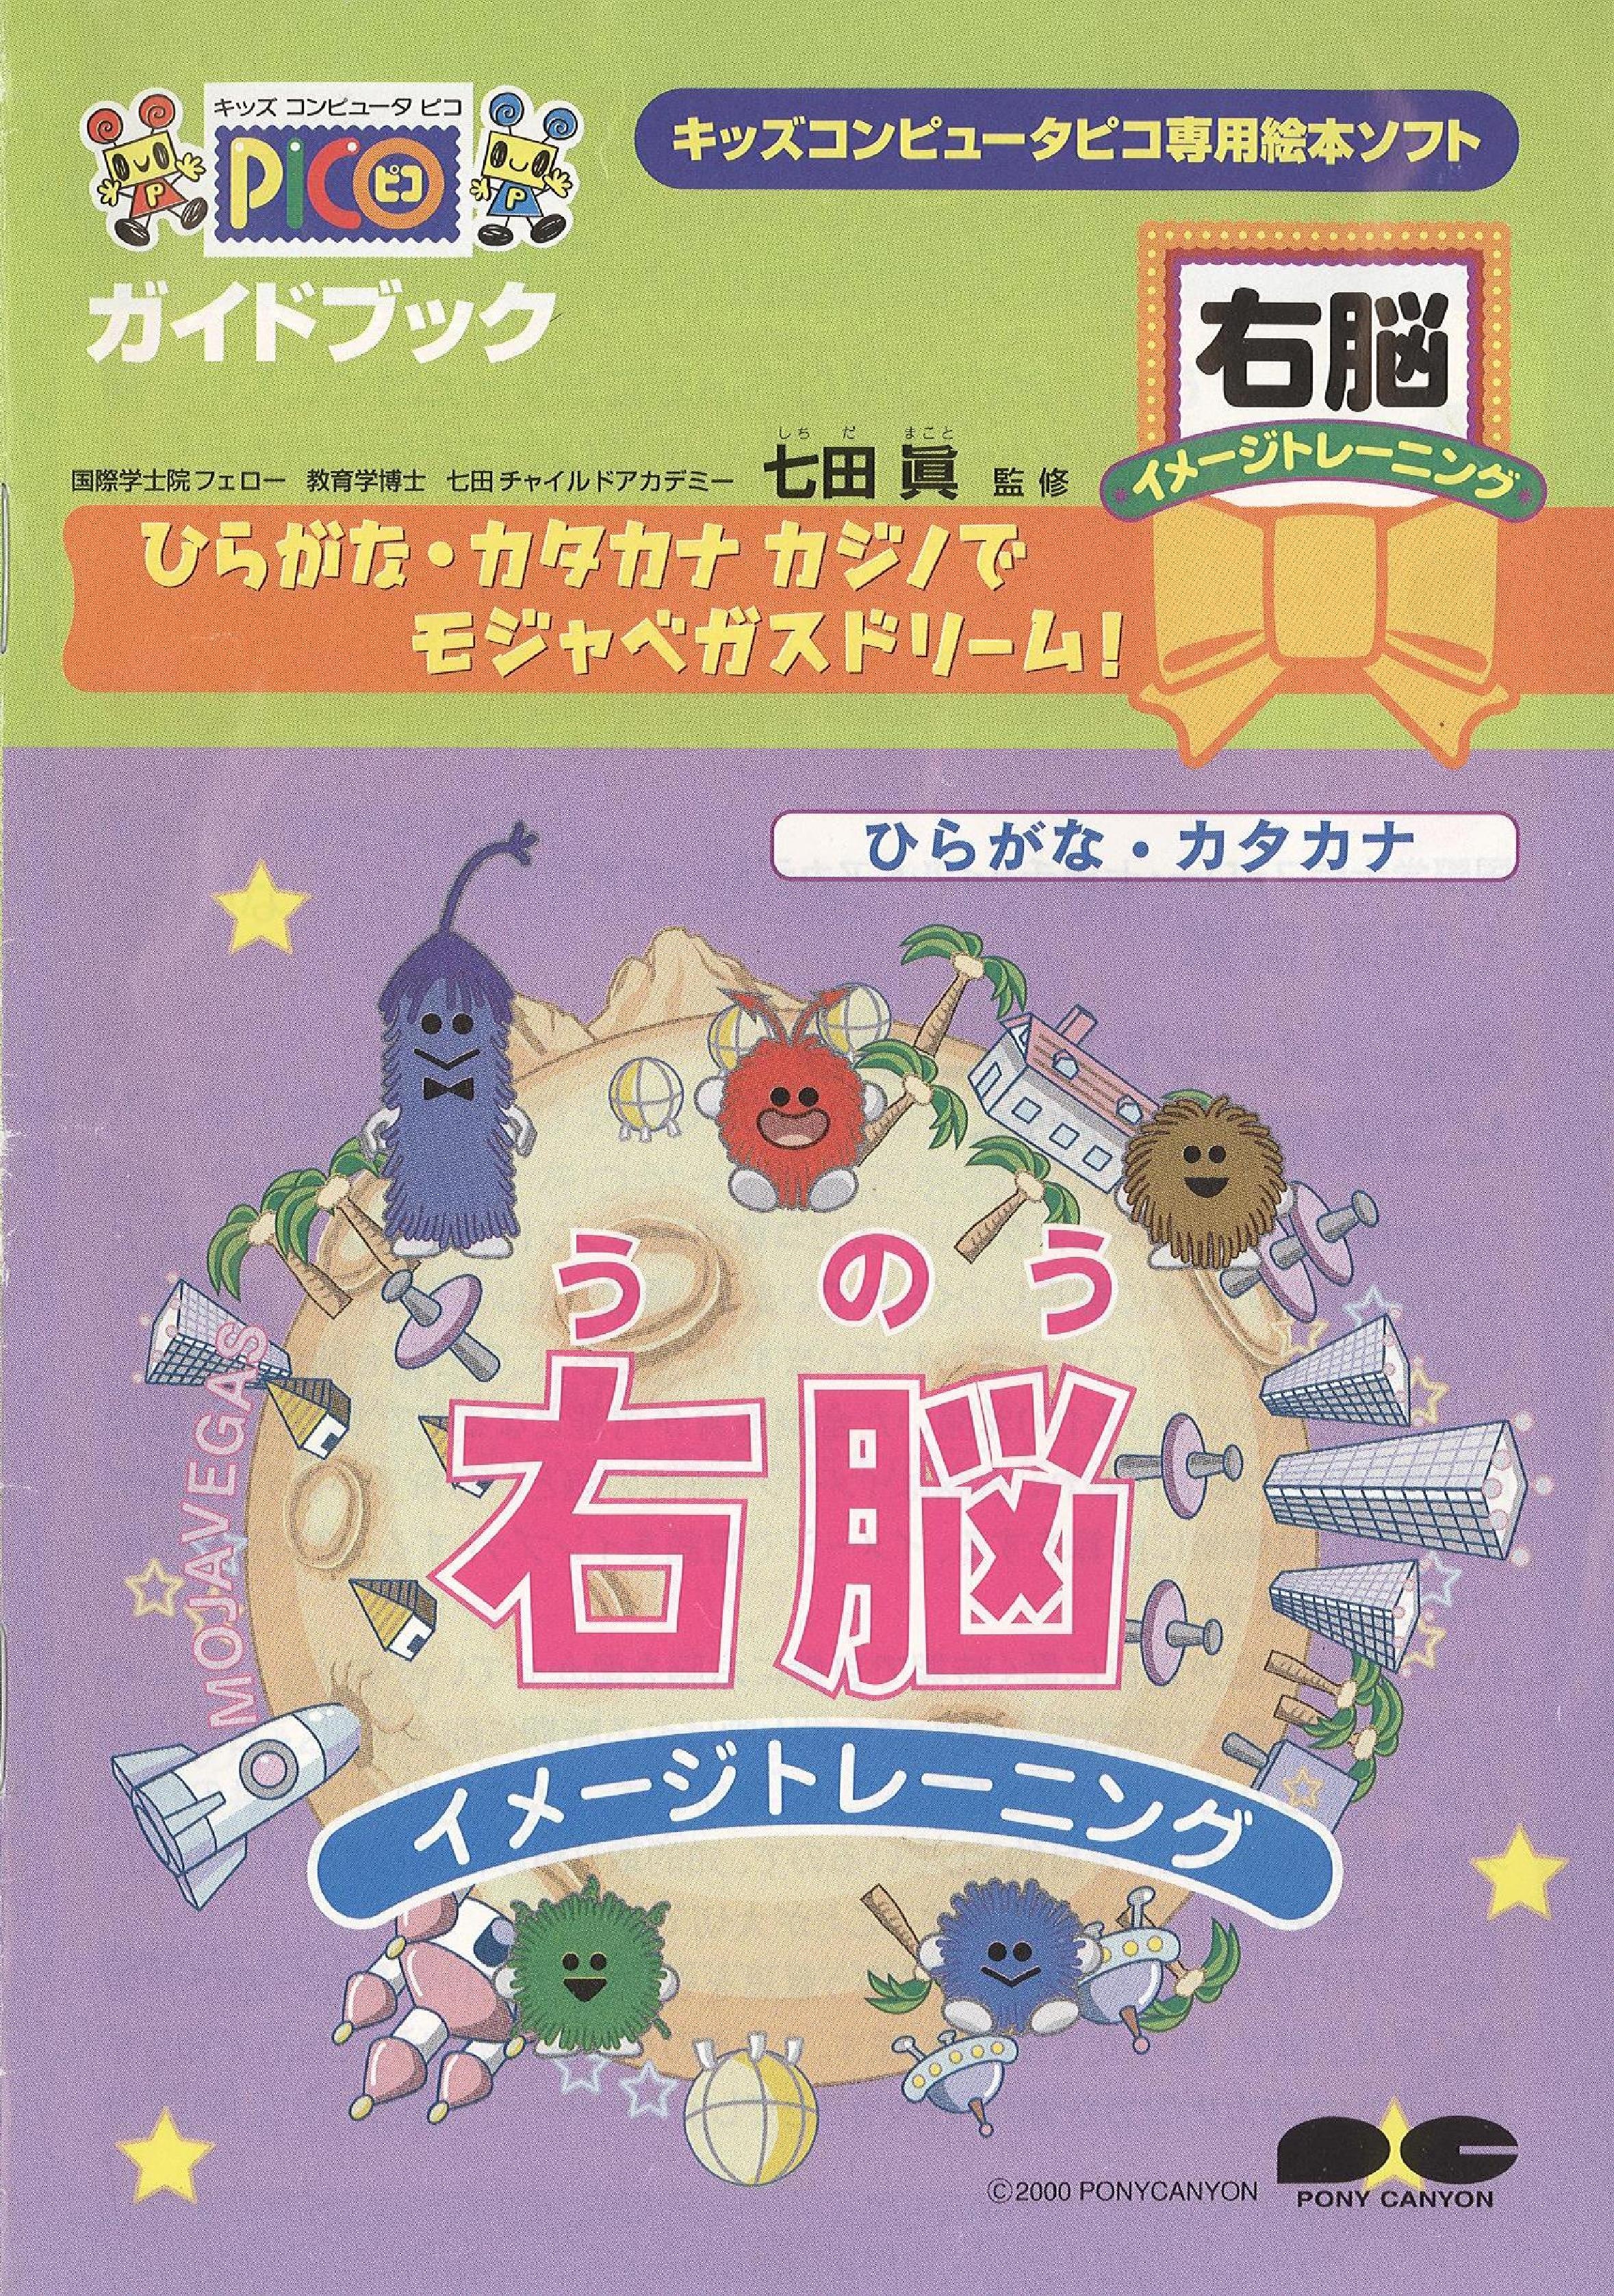 SMKUITHKCdMVD pico jp manual.pdf